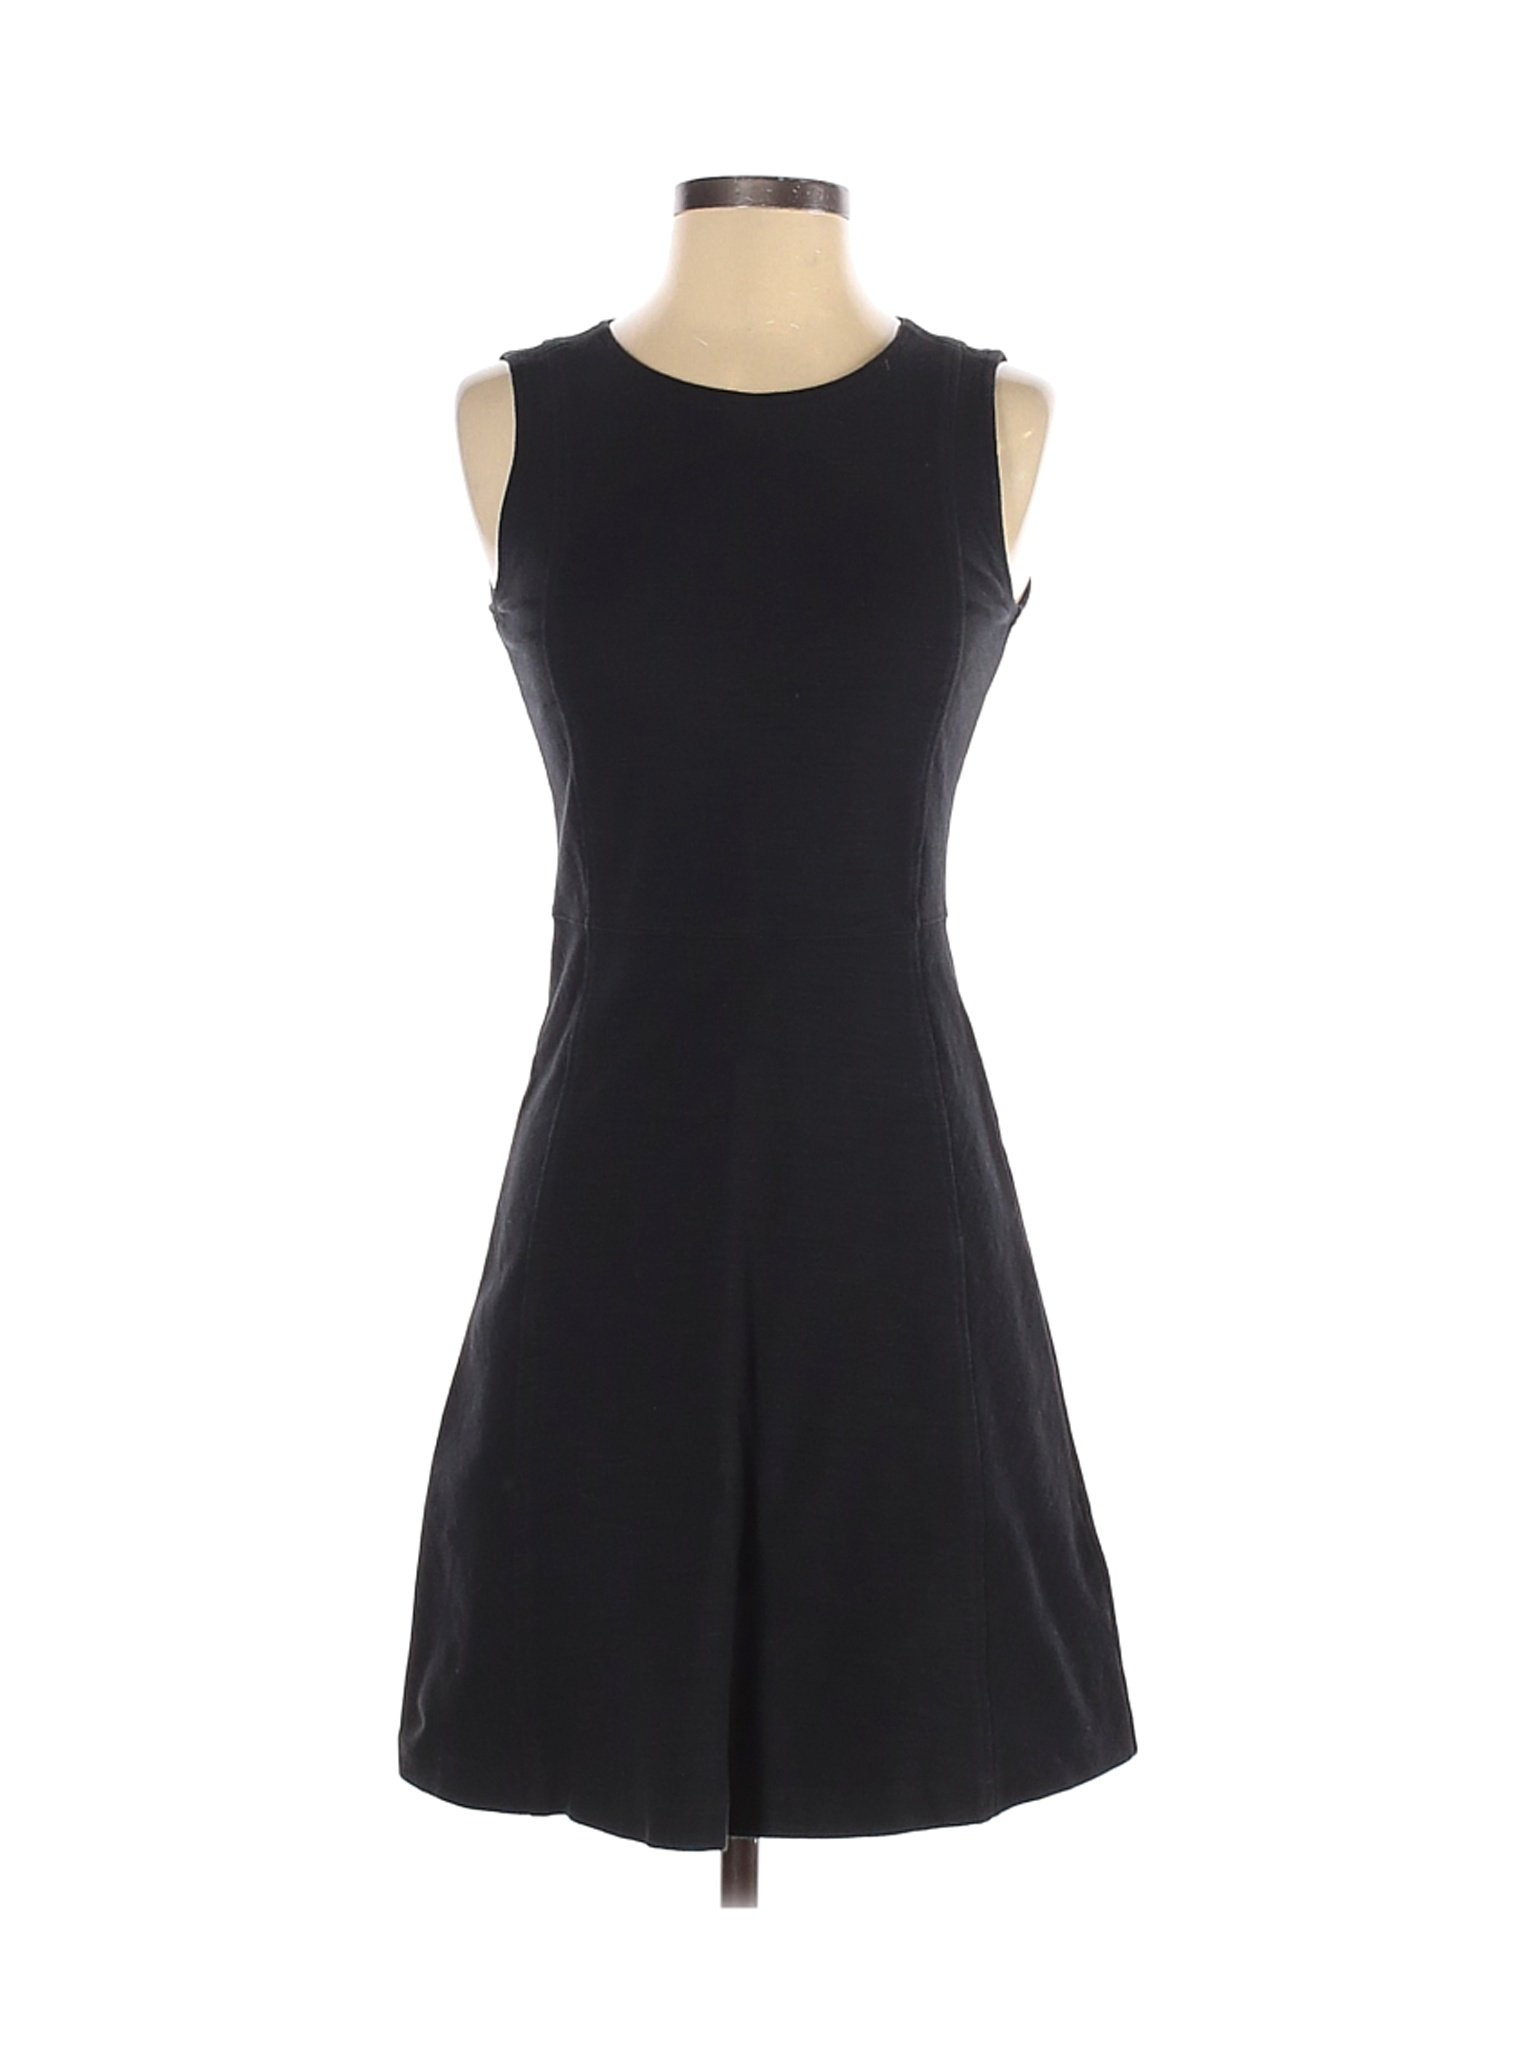 J.Crew Women Black Casual Dress 00 | eBay